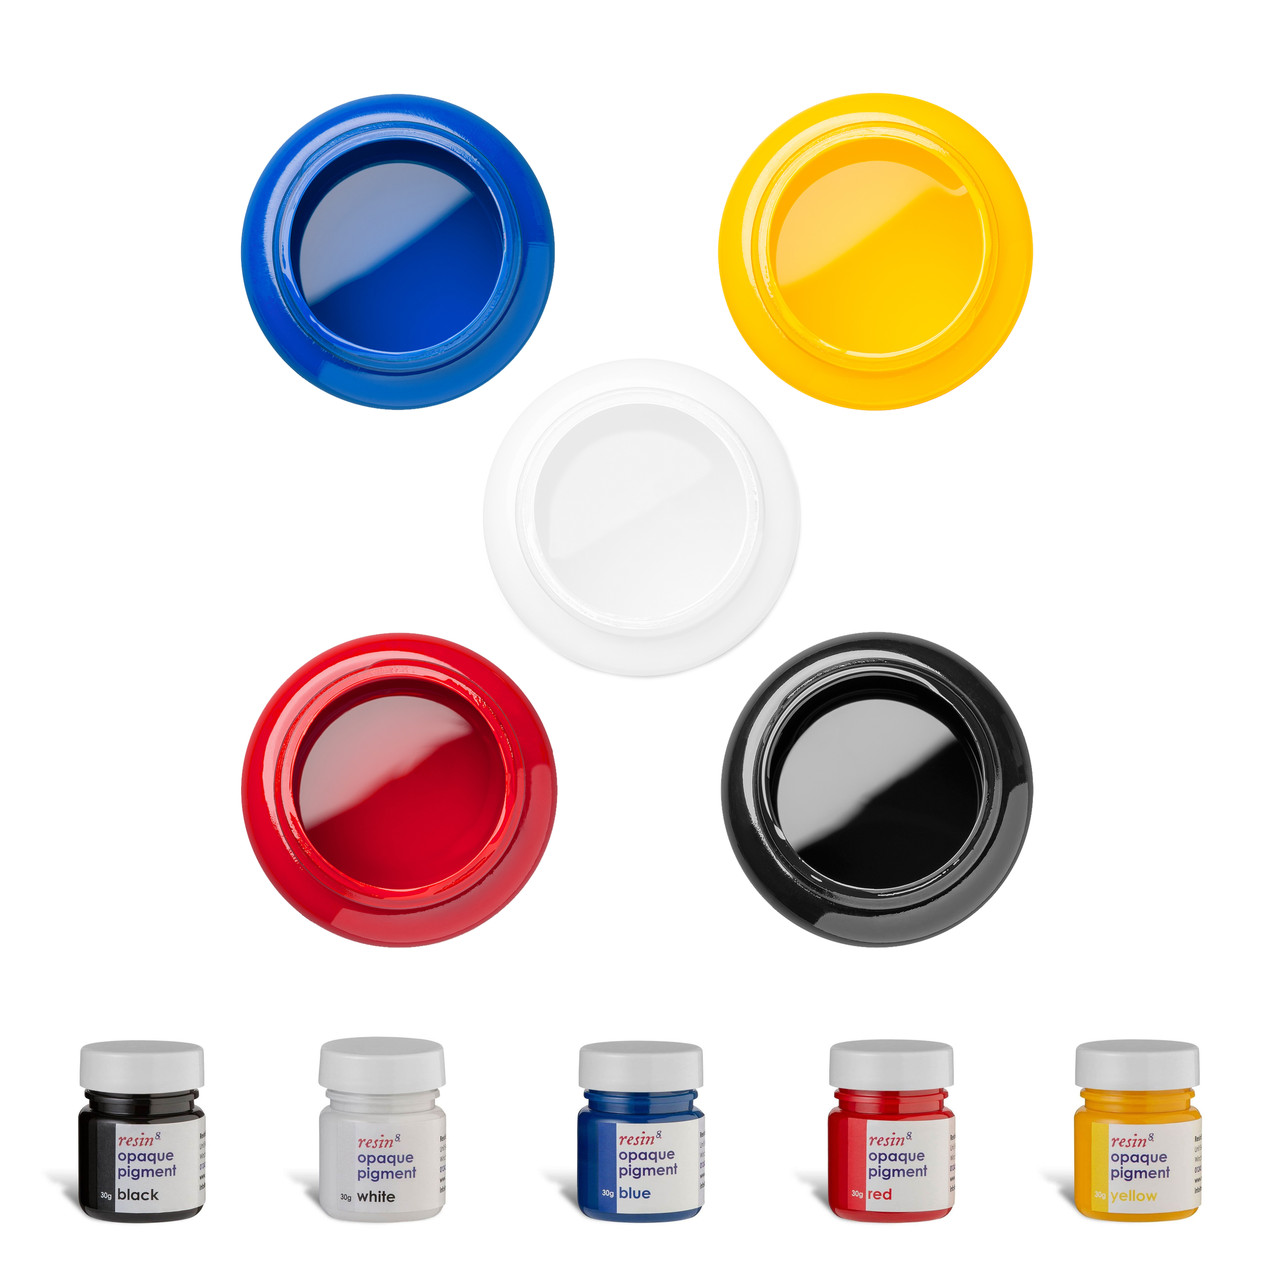 Resin8 Essential Opaque Pigment Bundle for Resin Art 30g Set of 5 | Cass Art